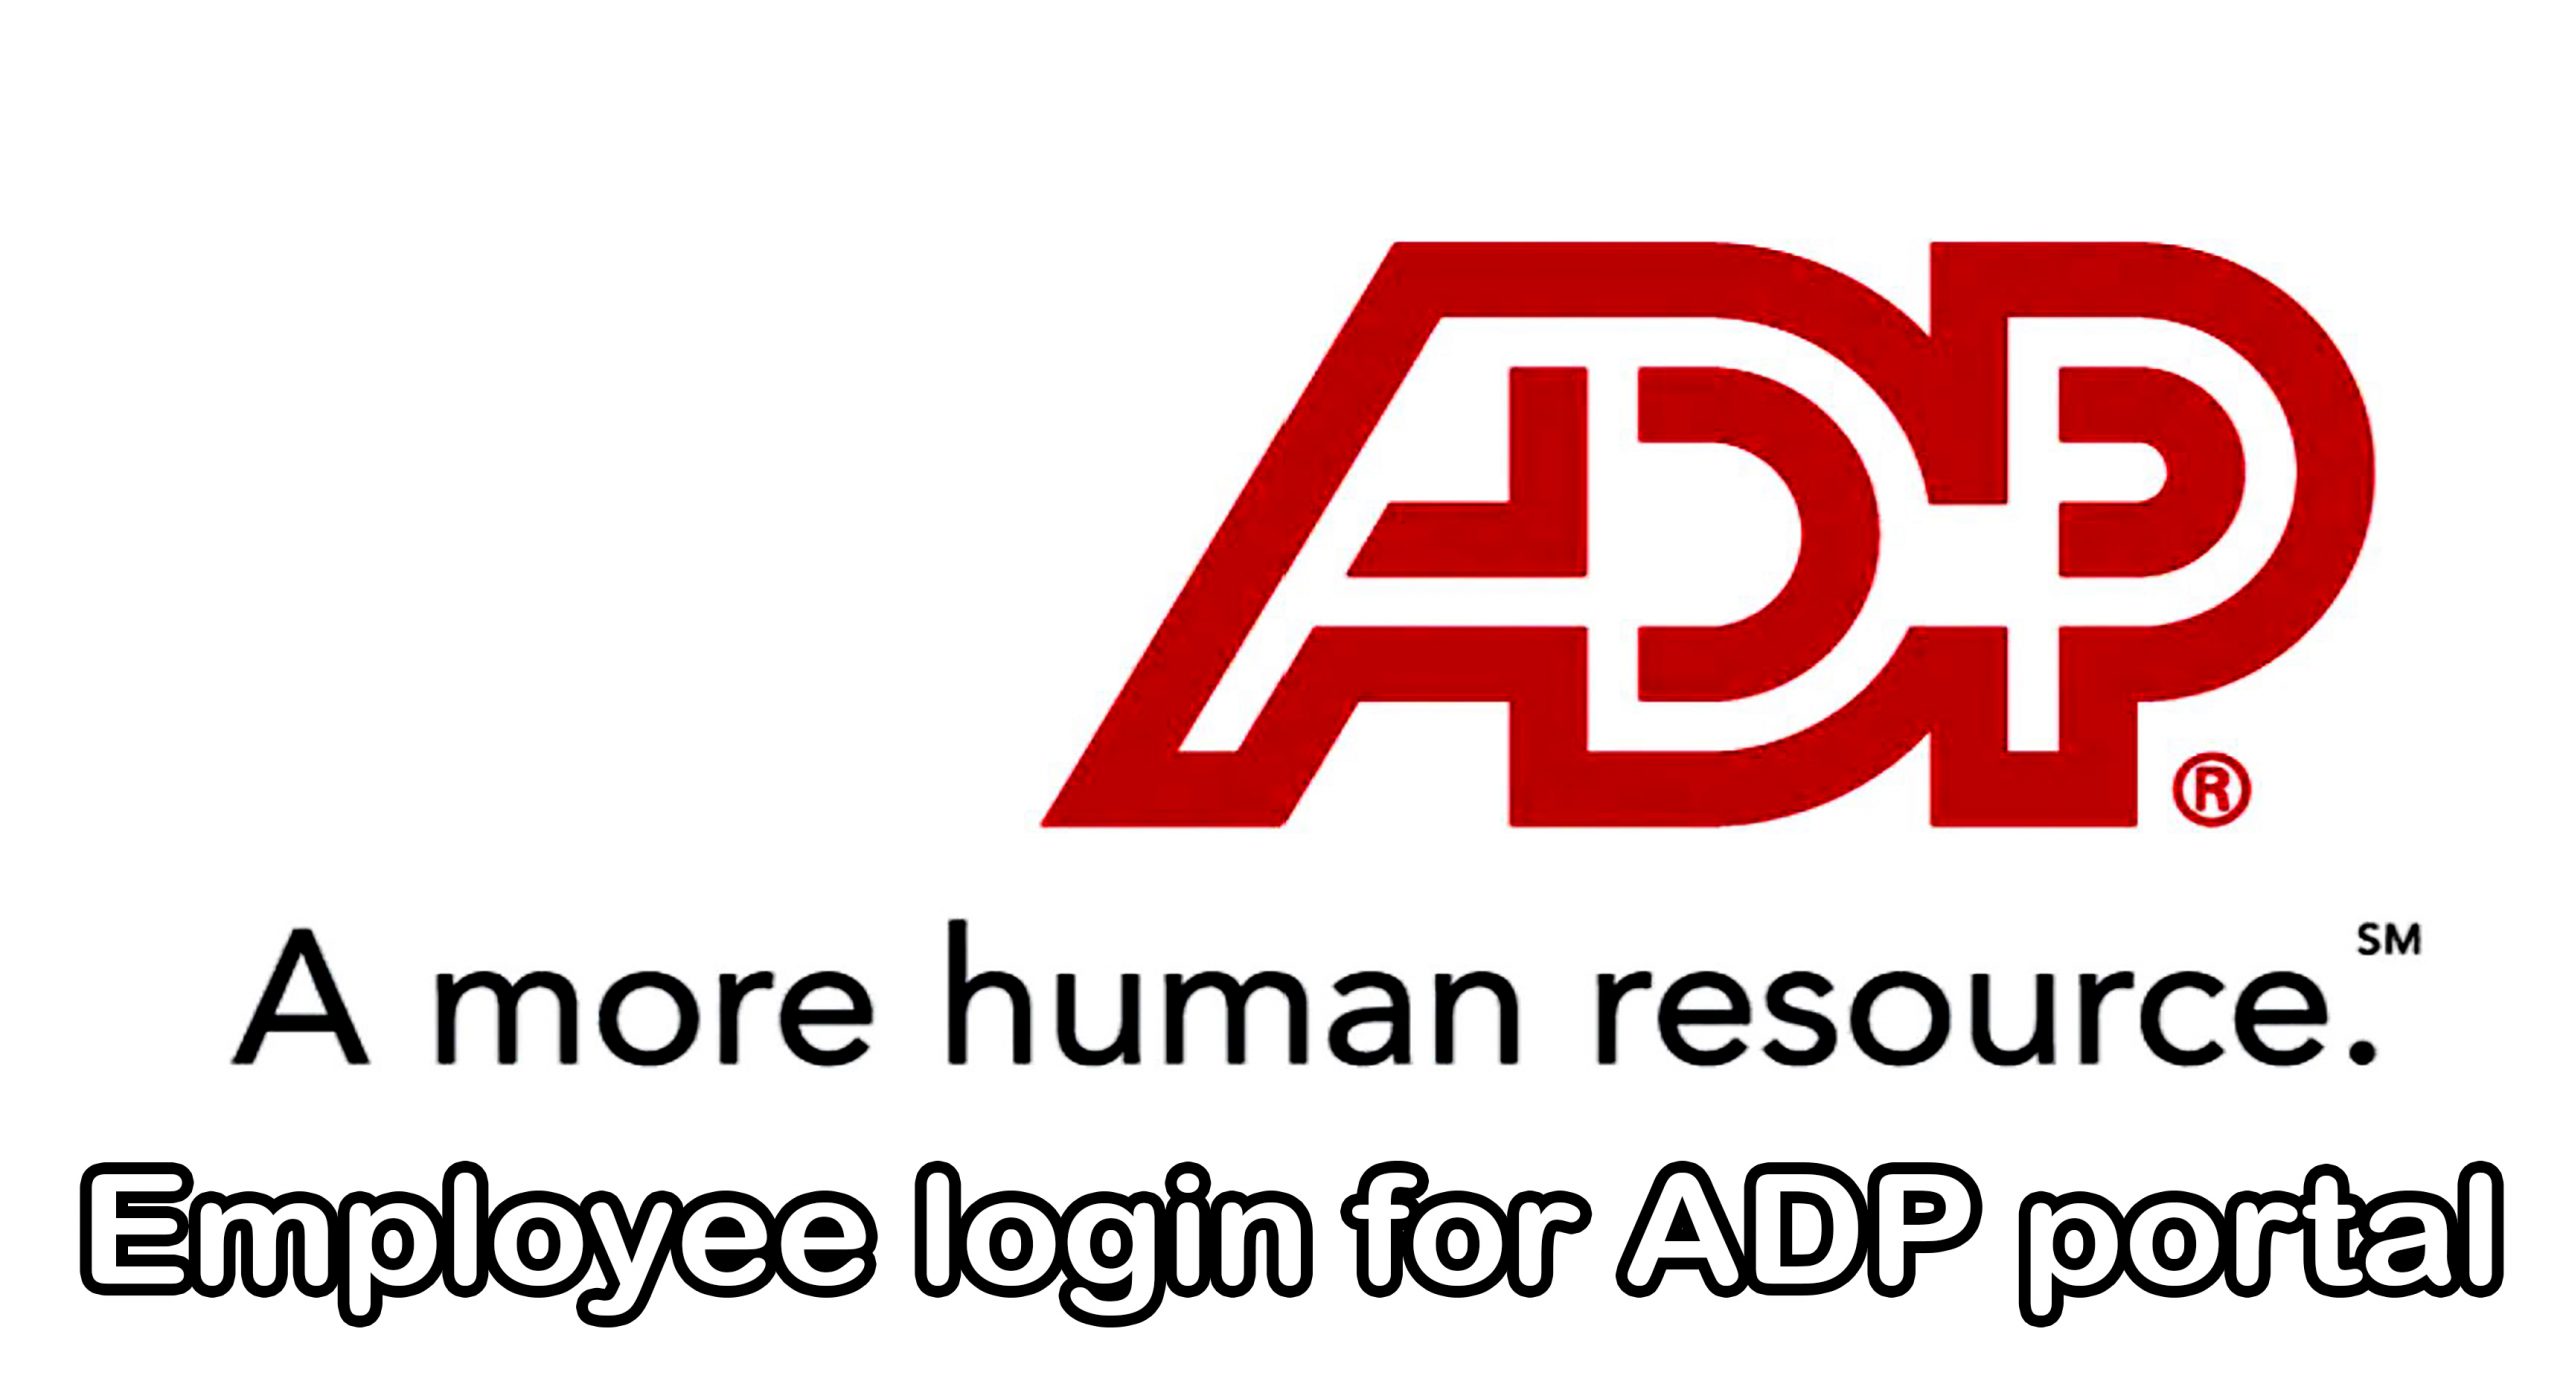 Employee login for ADP portal